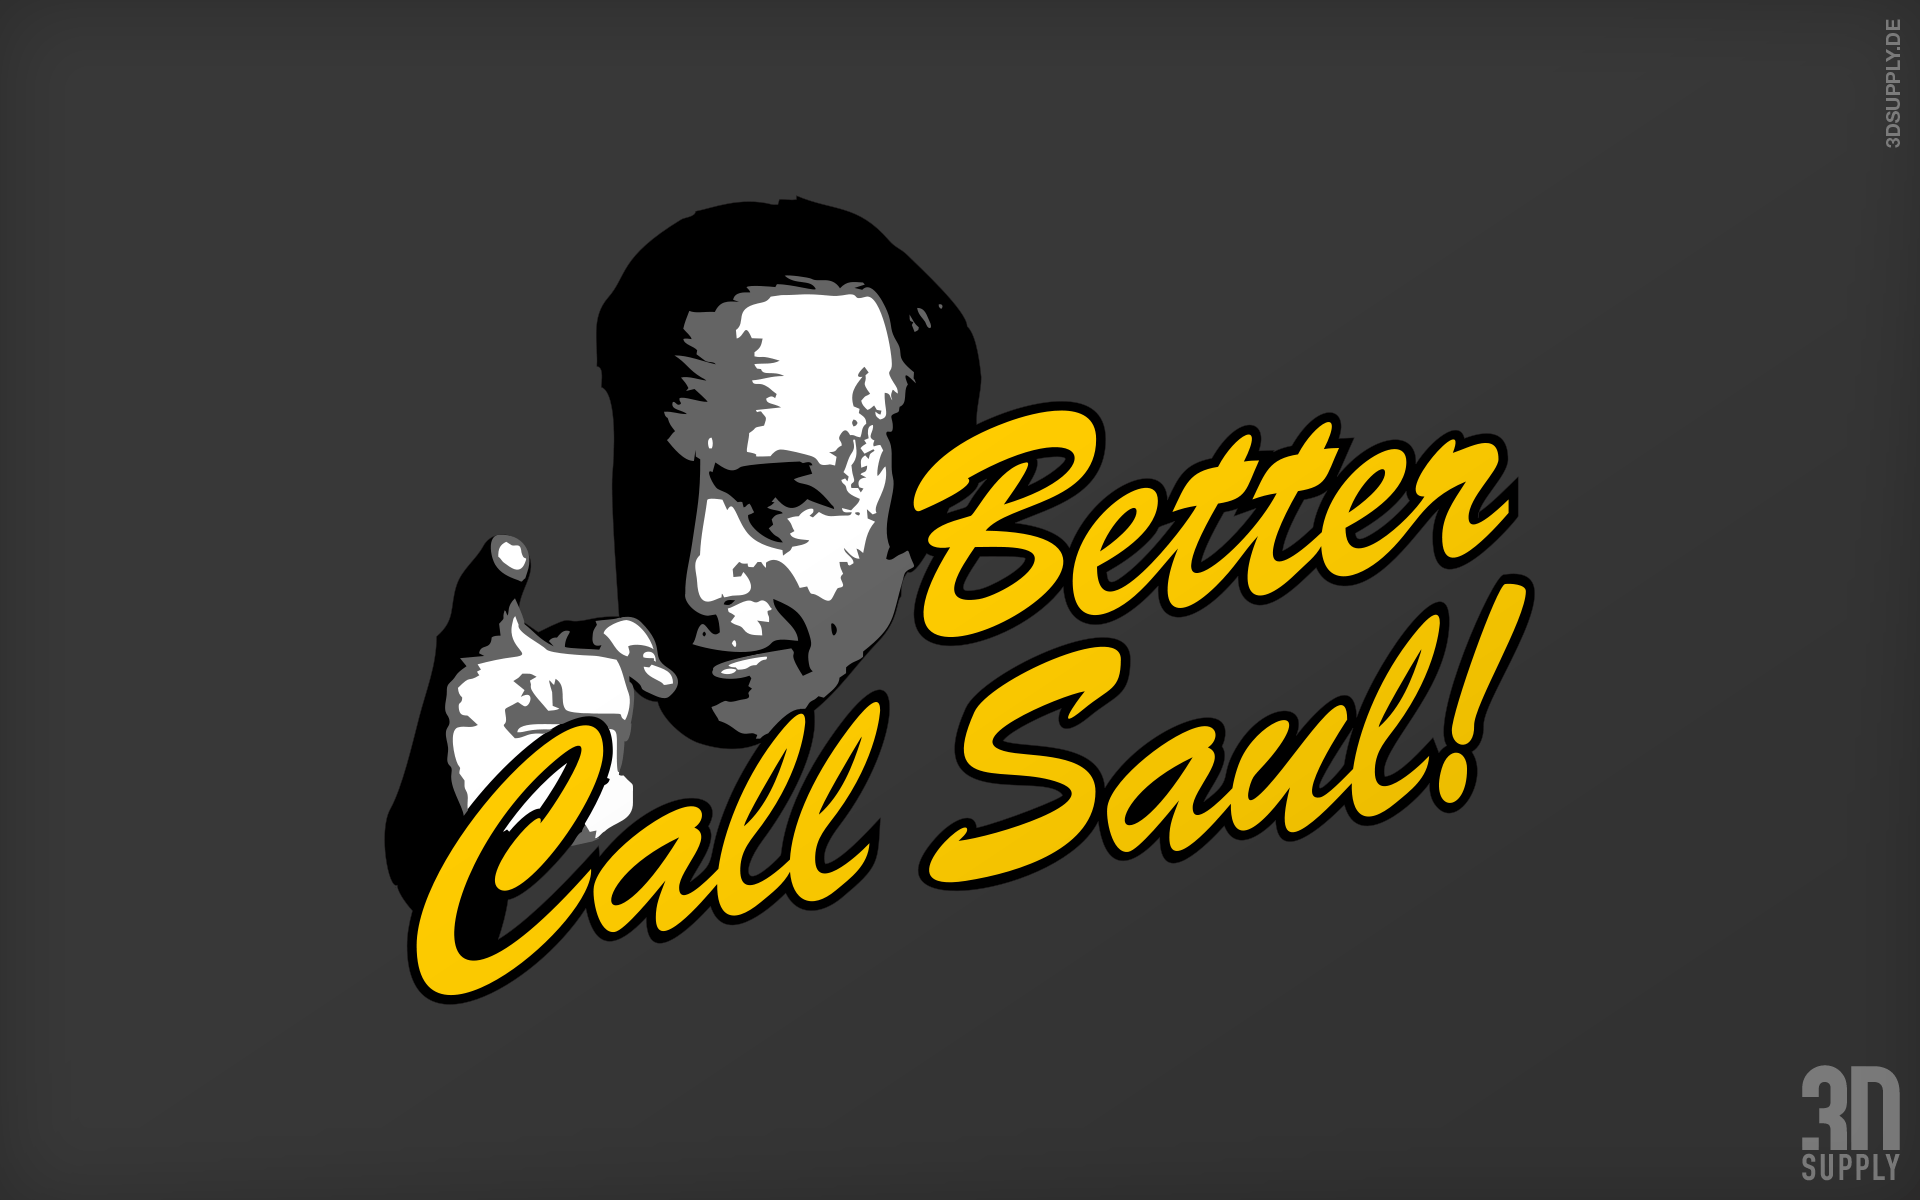 Better Call Saul HD Wallpaper for desktop download